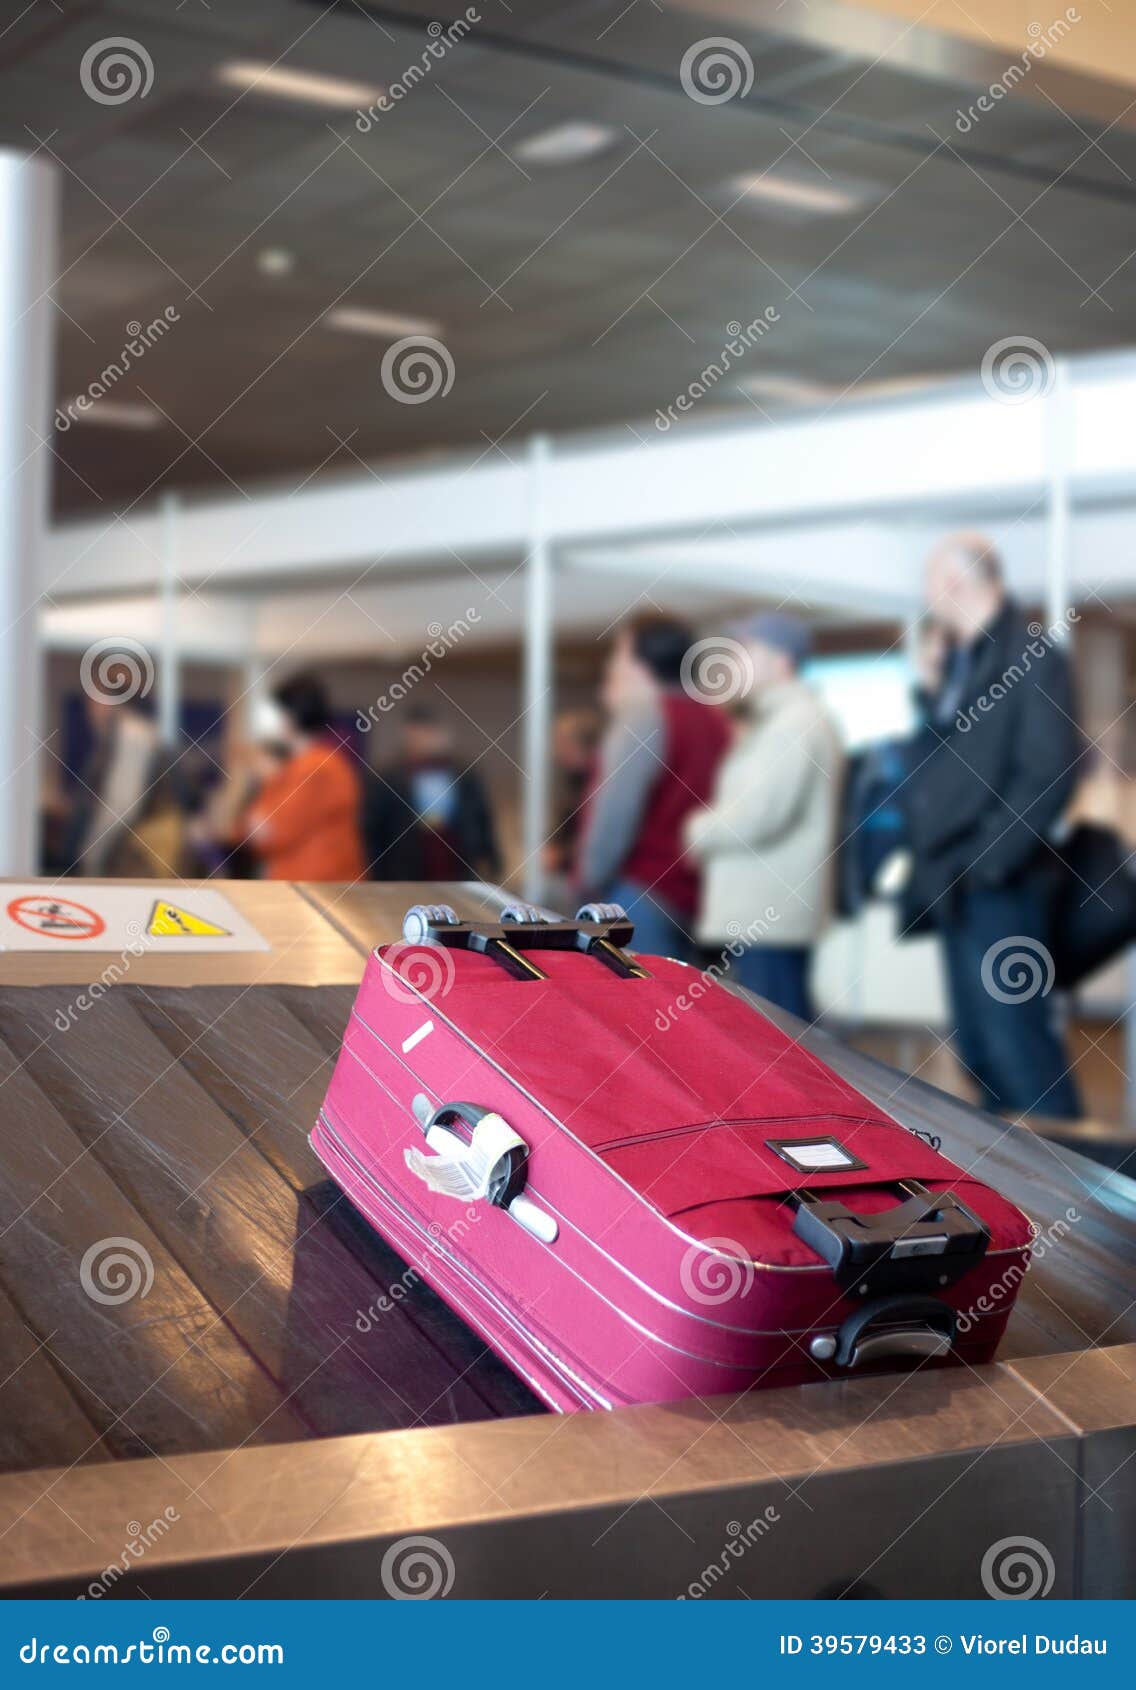 airport luggage claim